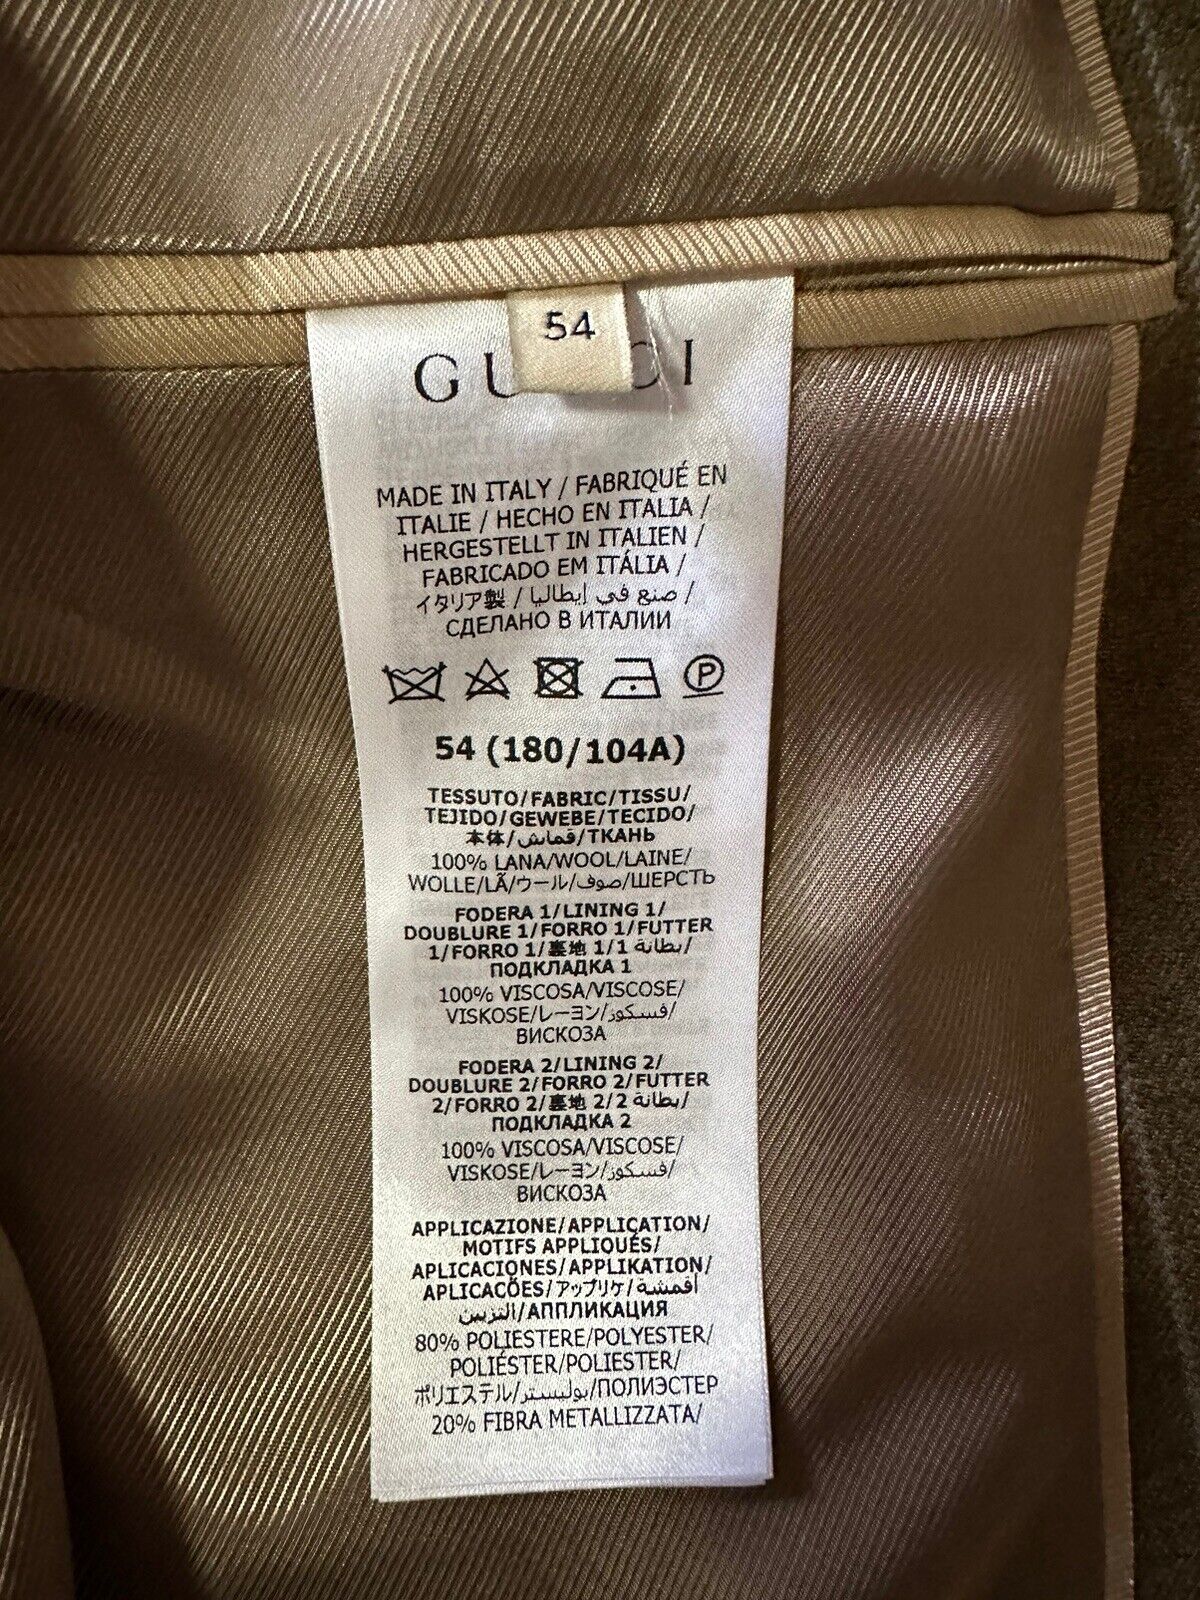 NWT $4850 Gucci Men’s Wool Striped Suit Green/Beige 44R US/54R Eu